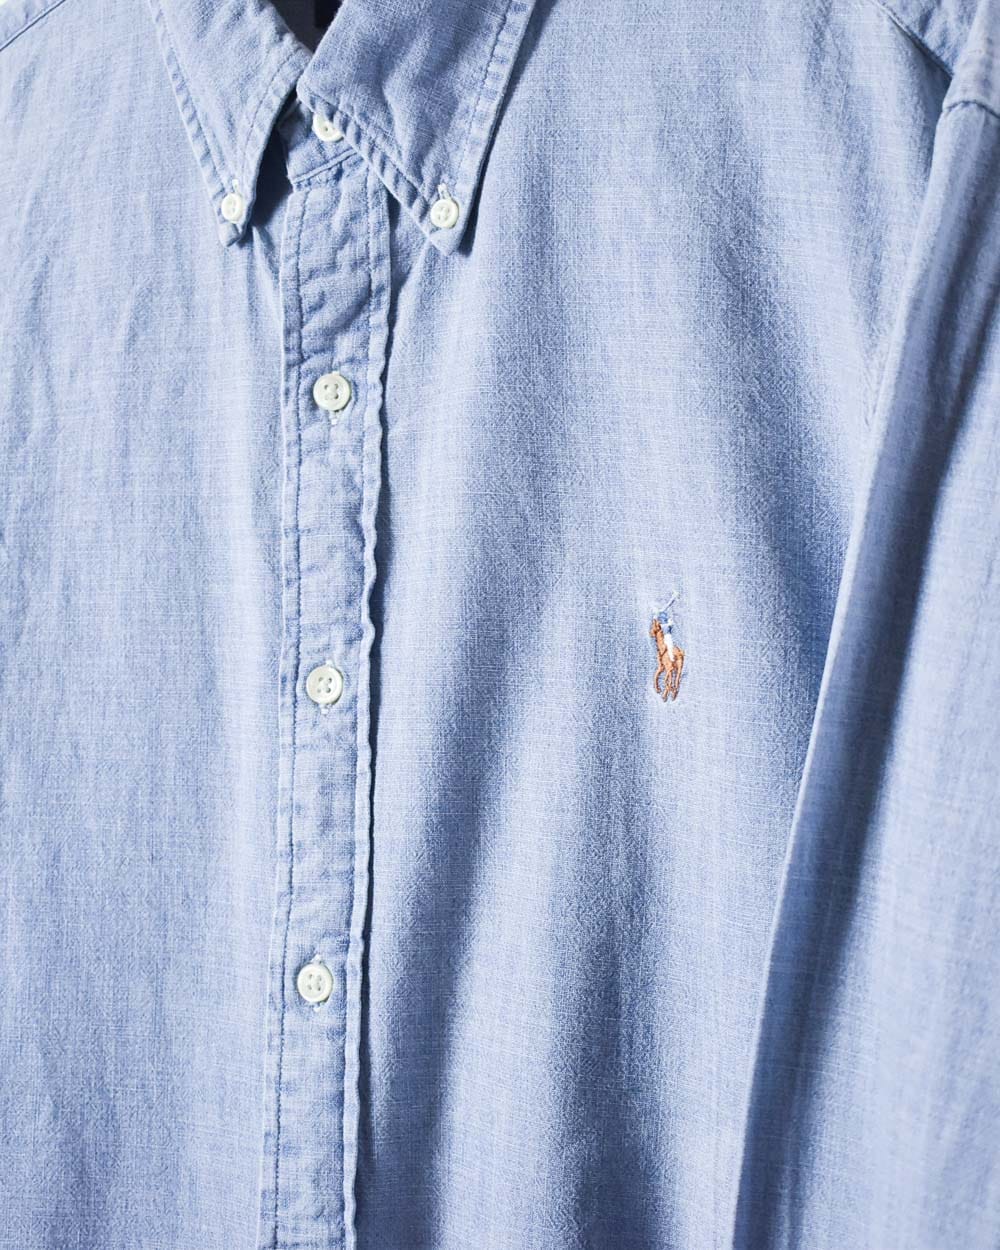 BabyBlue Polo Ralph Lauren Denim Shirt - Large